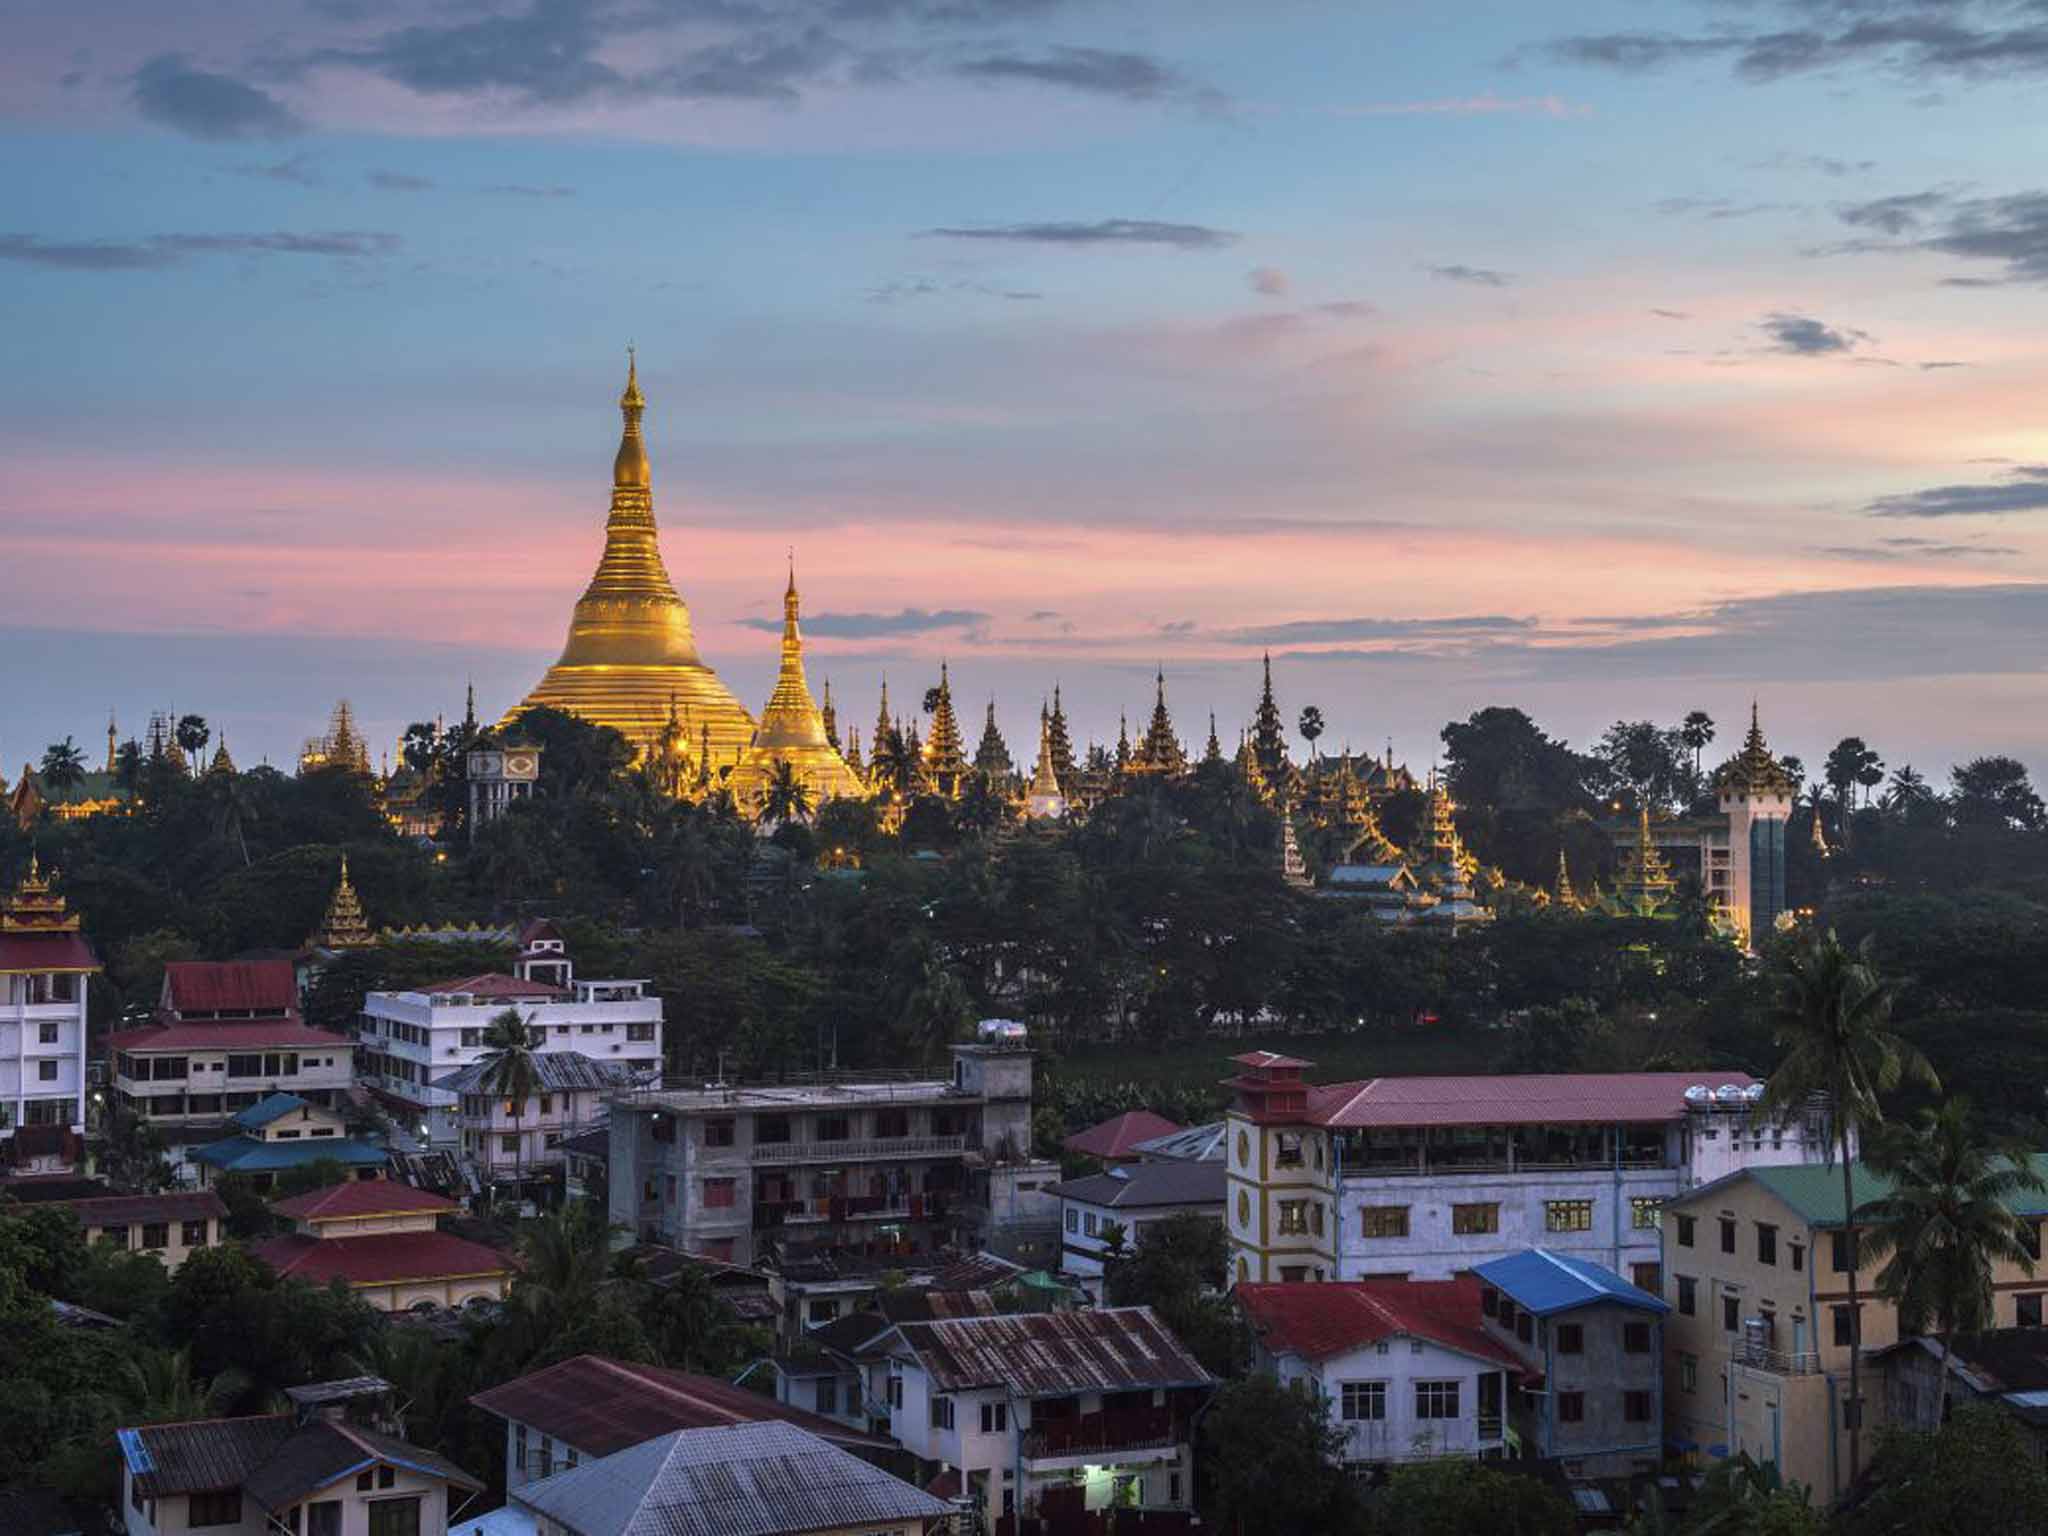 Shwedagon rises up through the trees